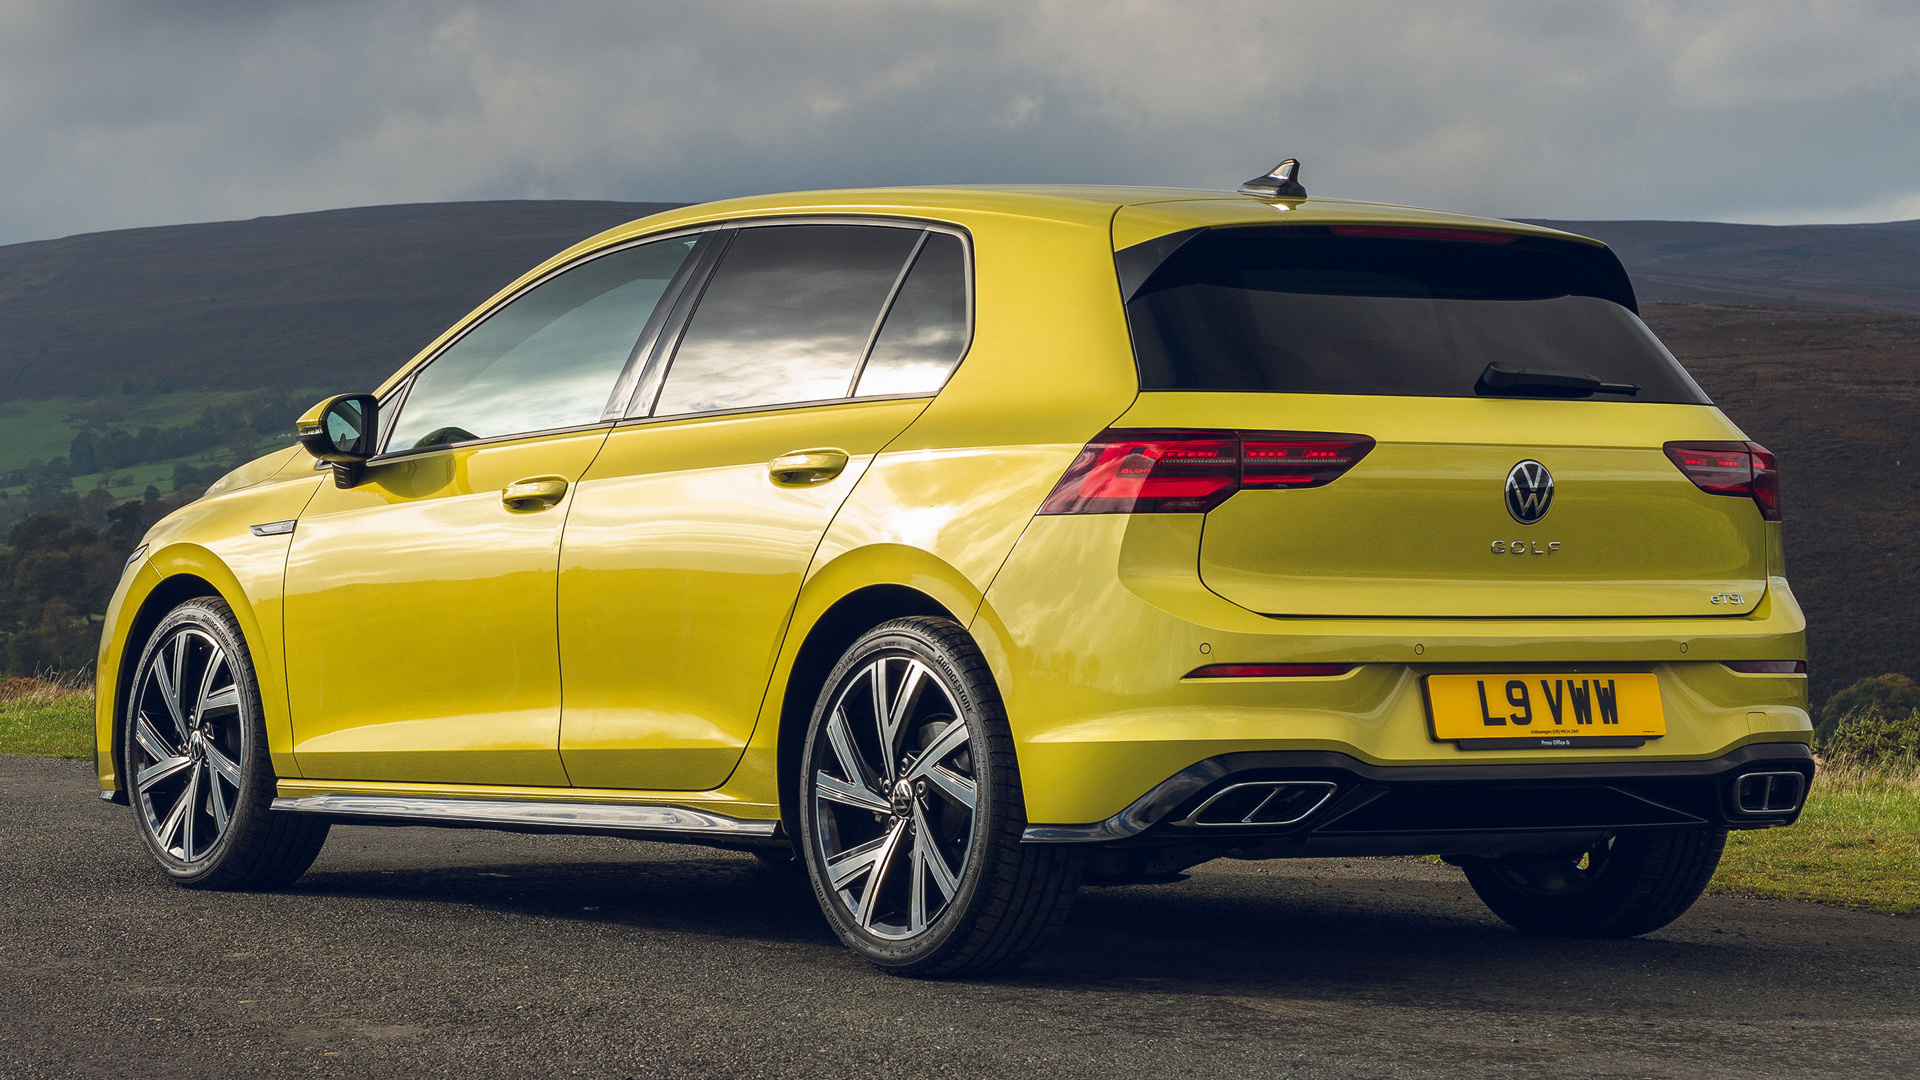 2020 Volkswagen Golf Mild Hybrid RLine (UK) Wallpapers and HD Images